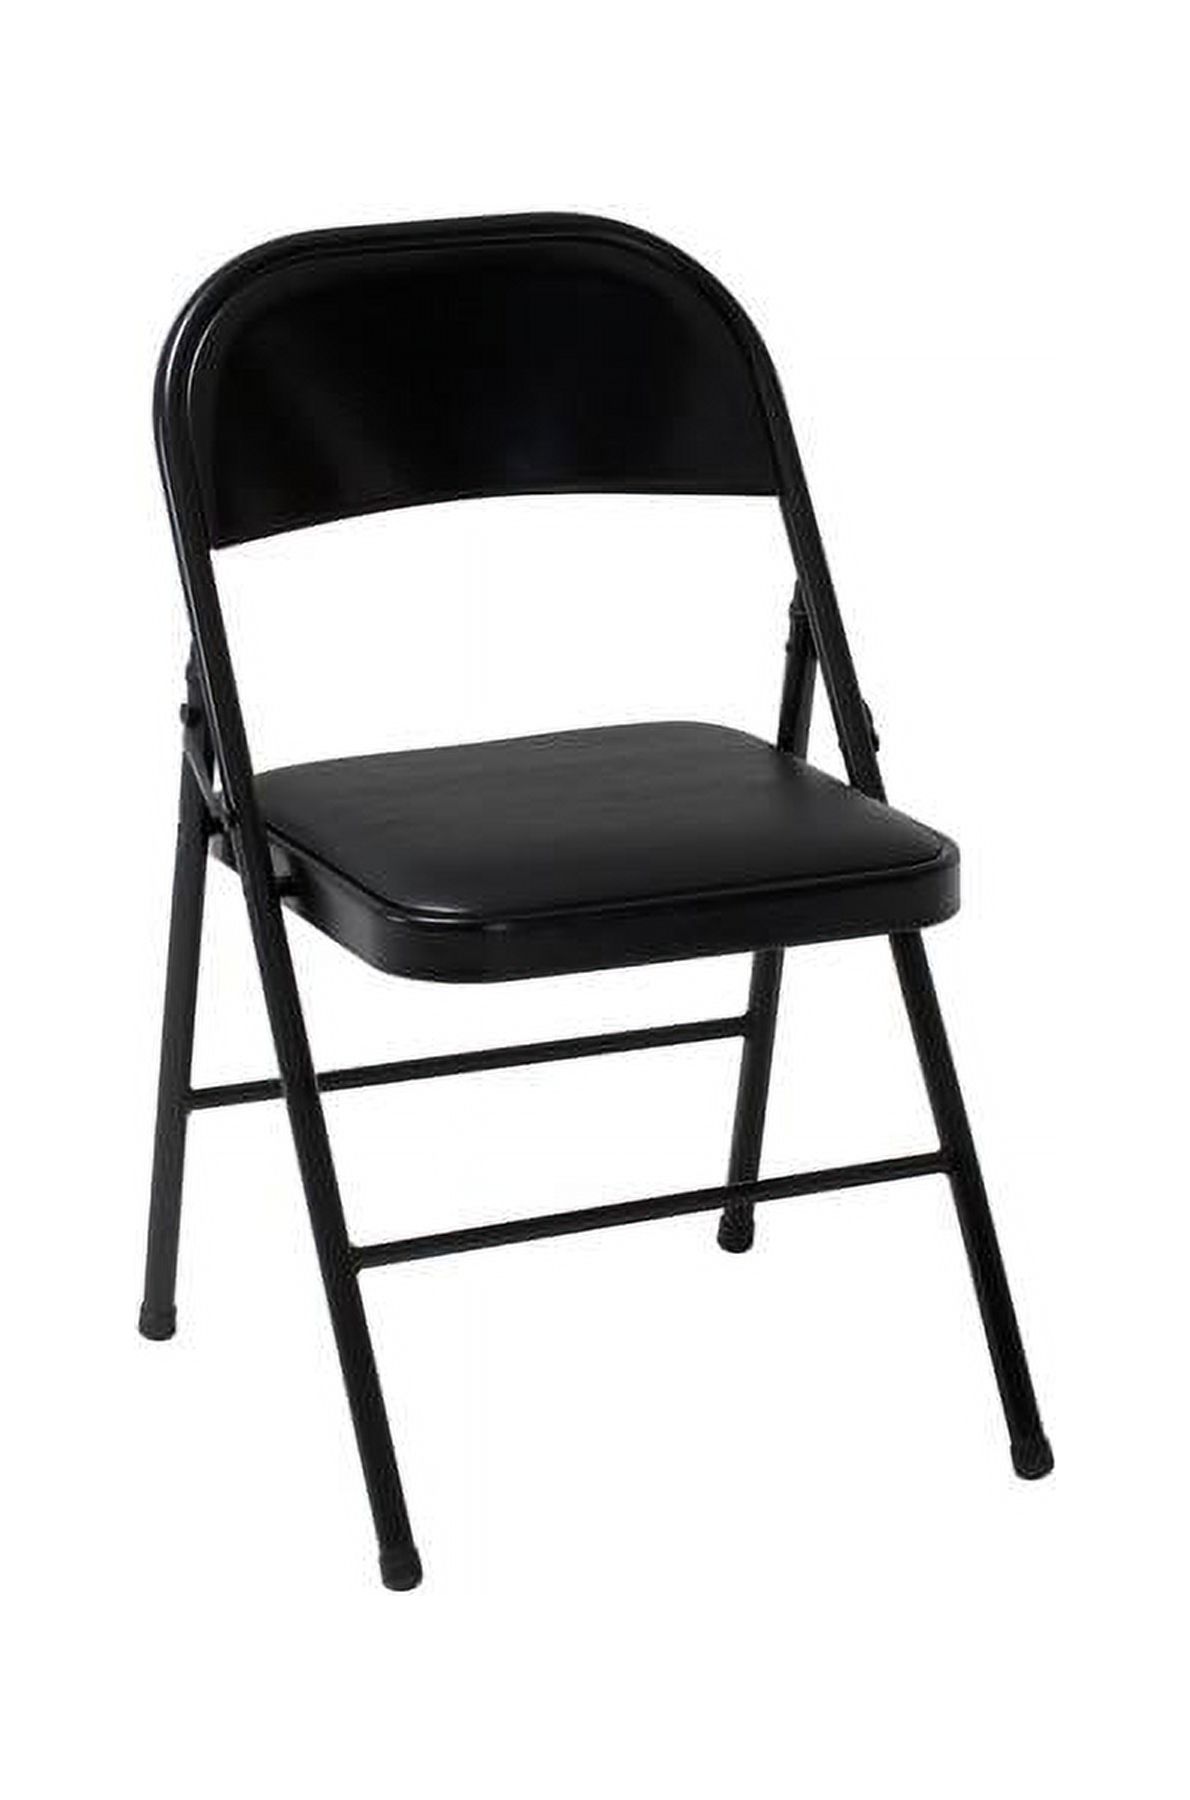 Mainstays Vinyl Folding Chair (4 Pack), Black - image 2 of 12